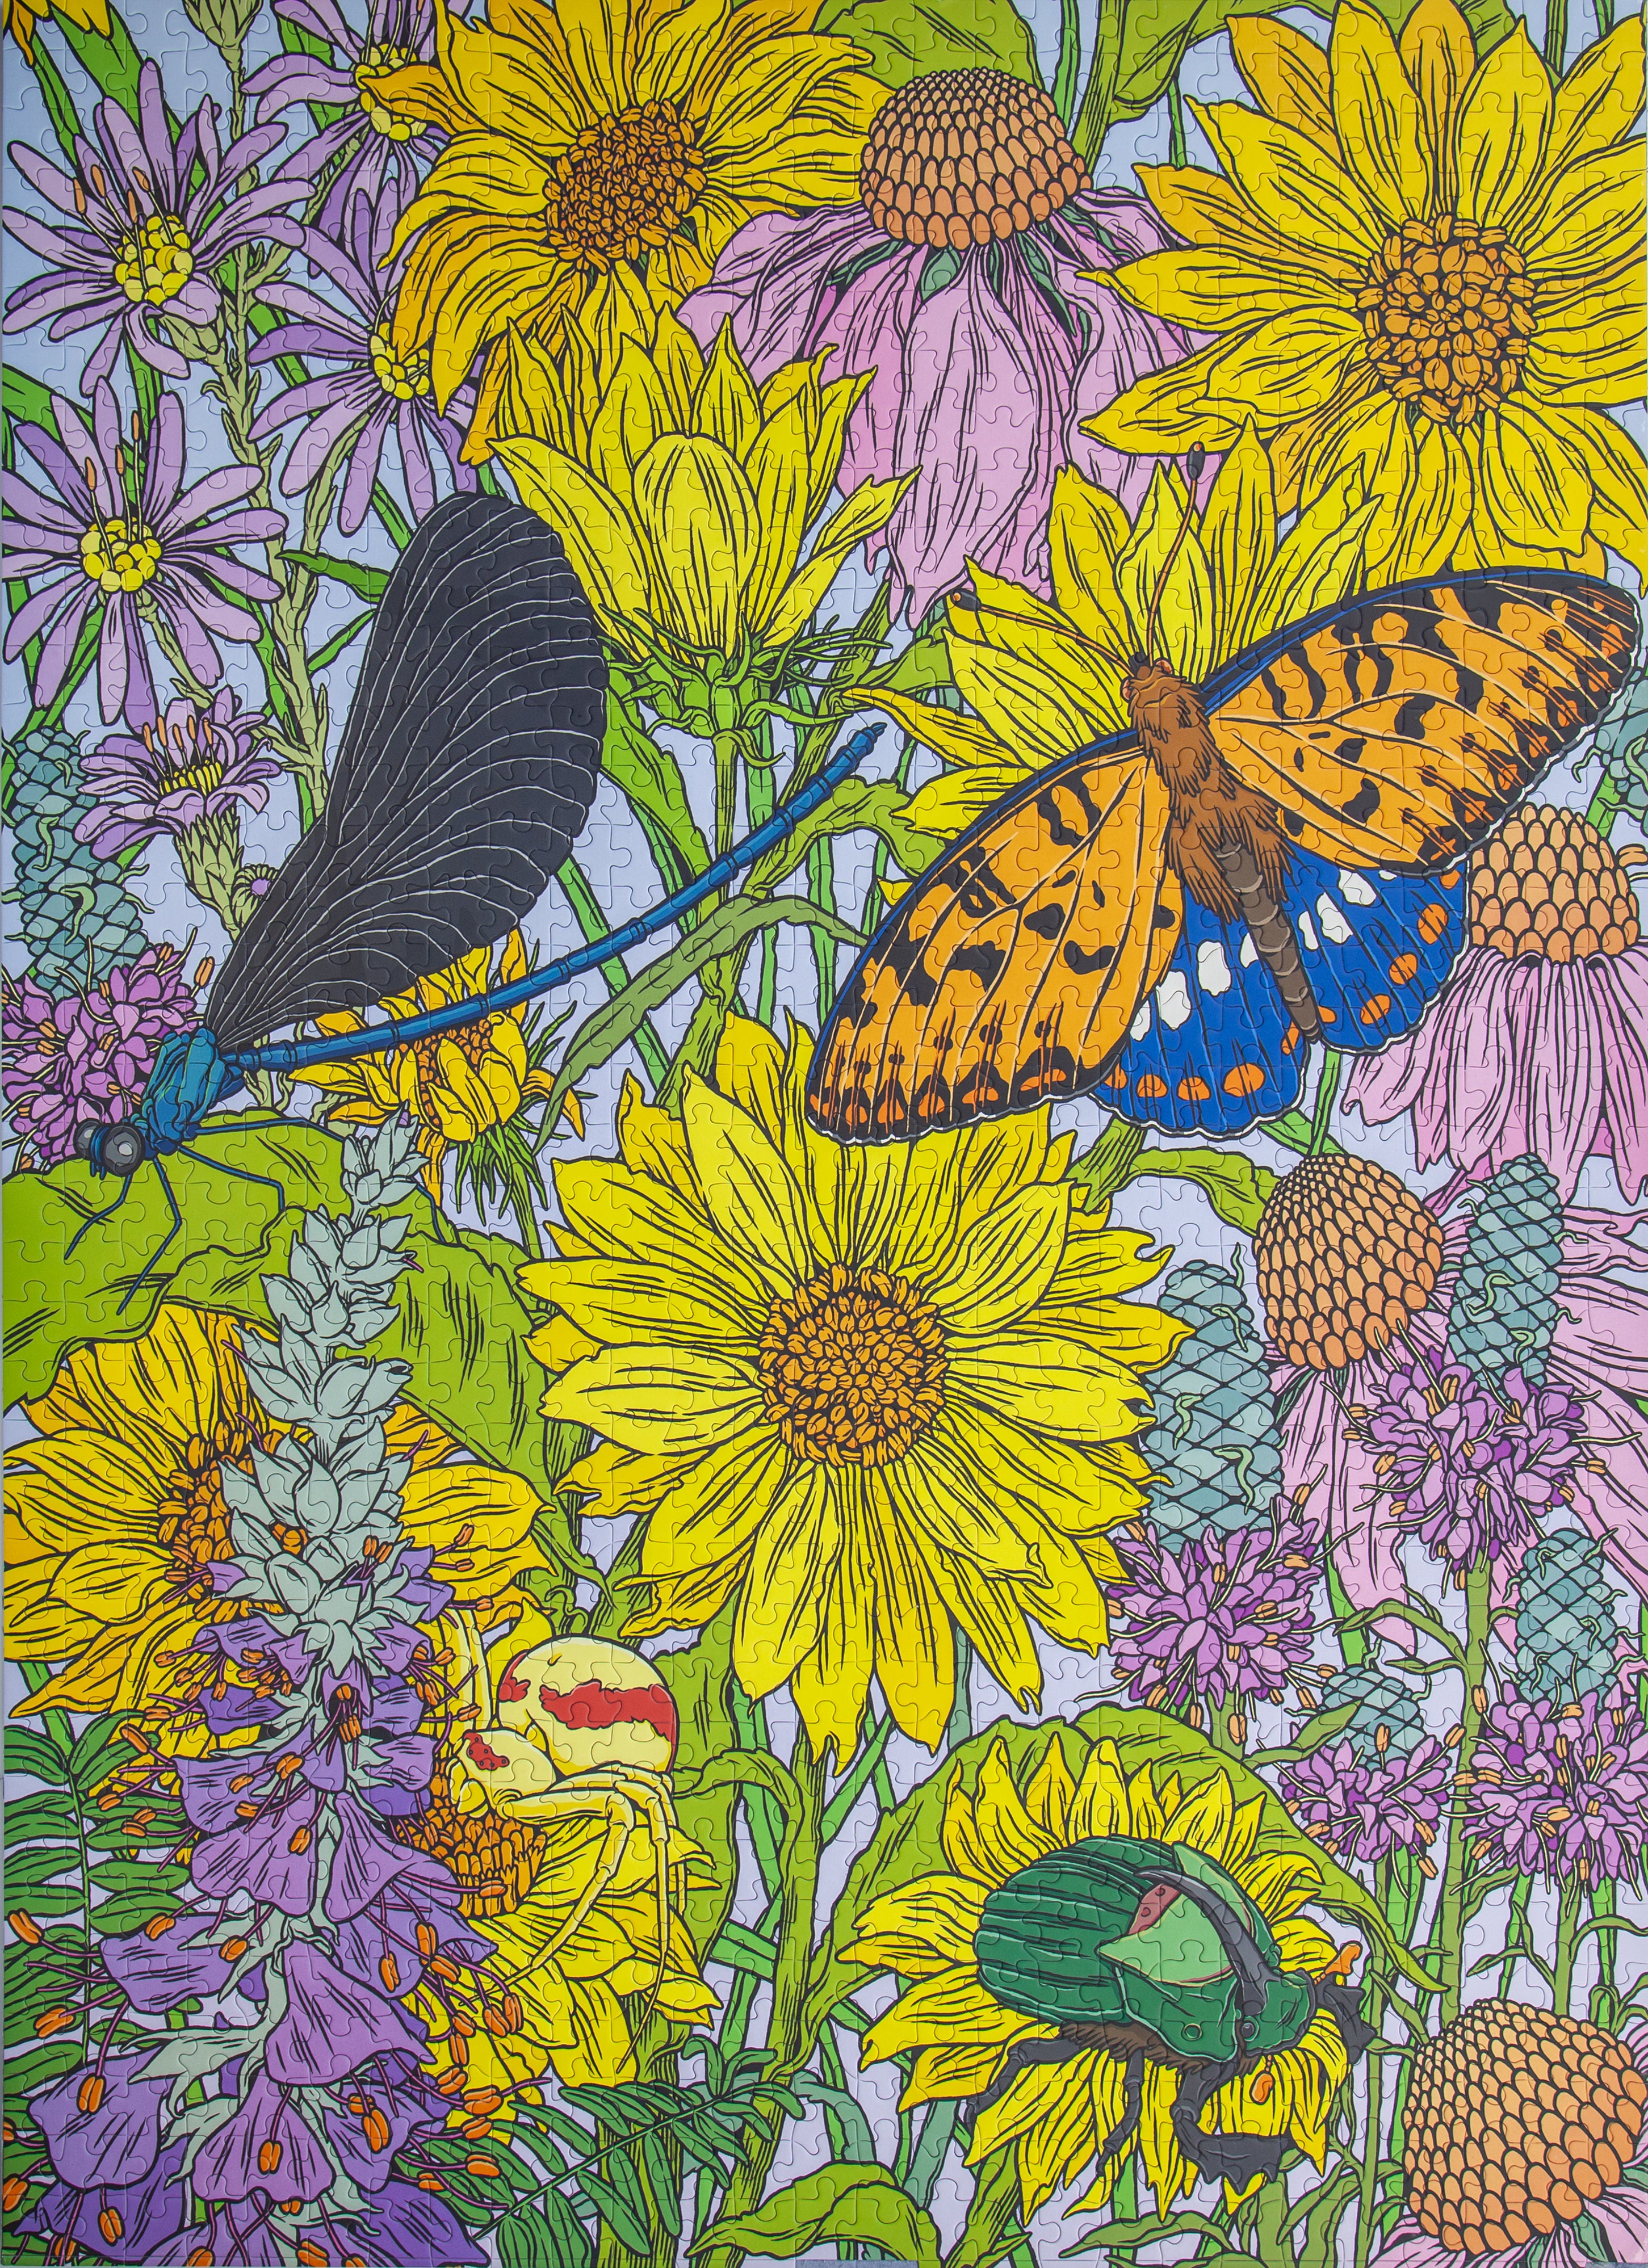 Fields & Flowers | 1,000 Piece Puzzle